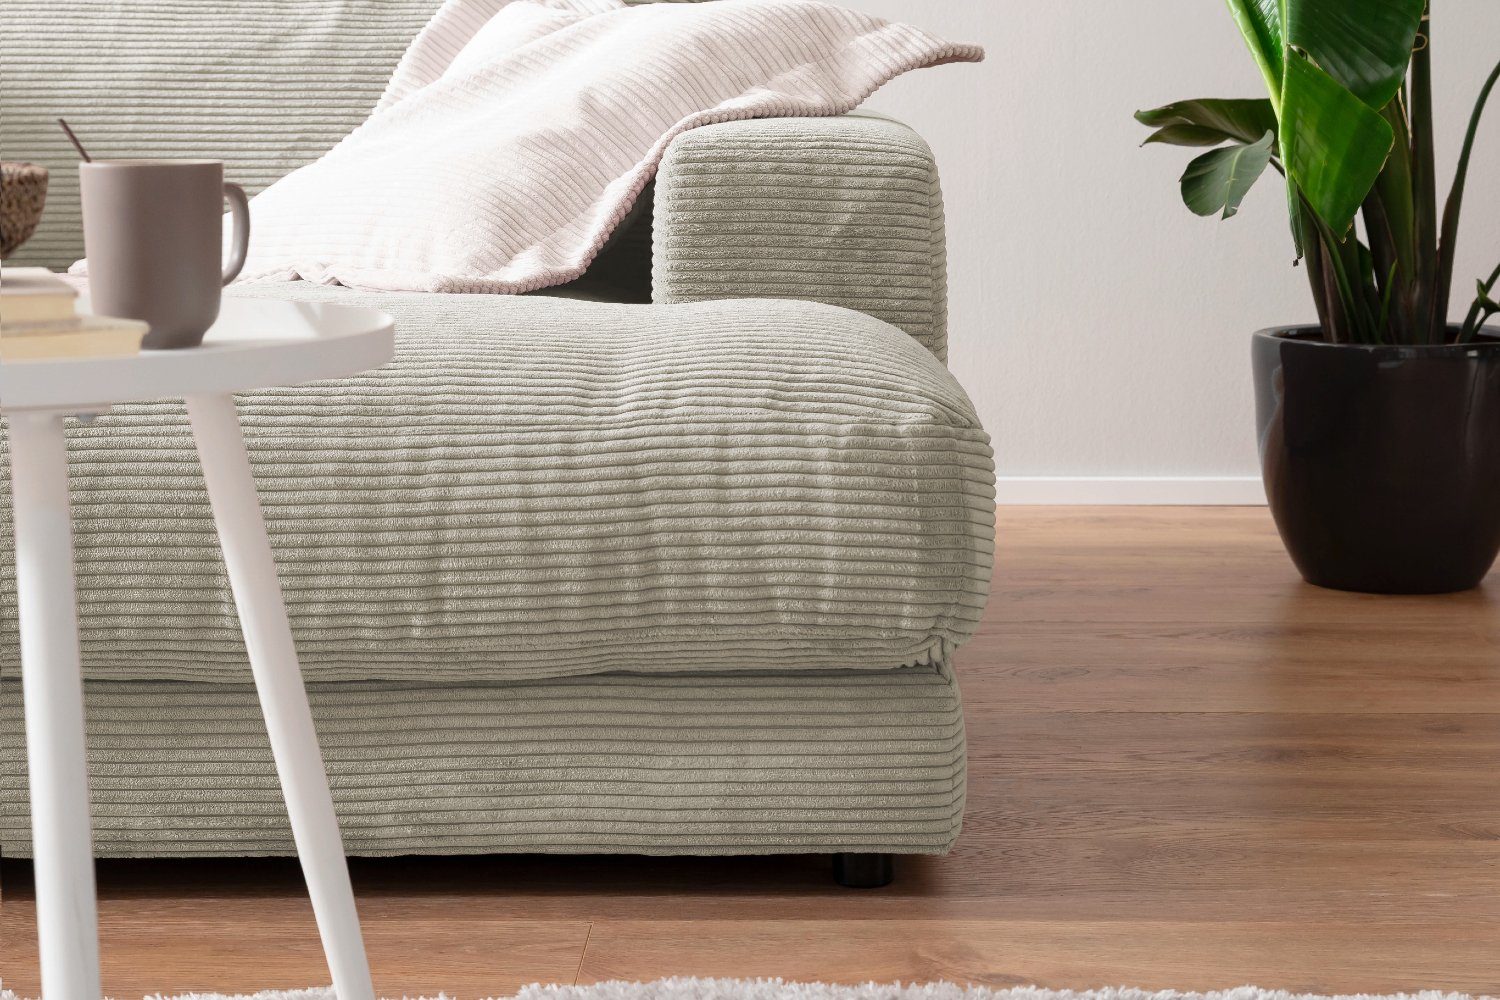 Stoff Big-Sofa KAWOLA Cord verschiedene Sofa od. MADELINE, Farben